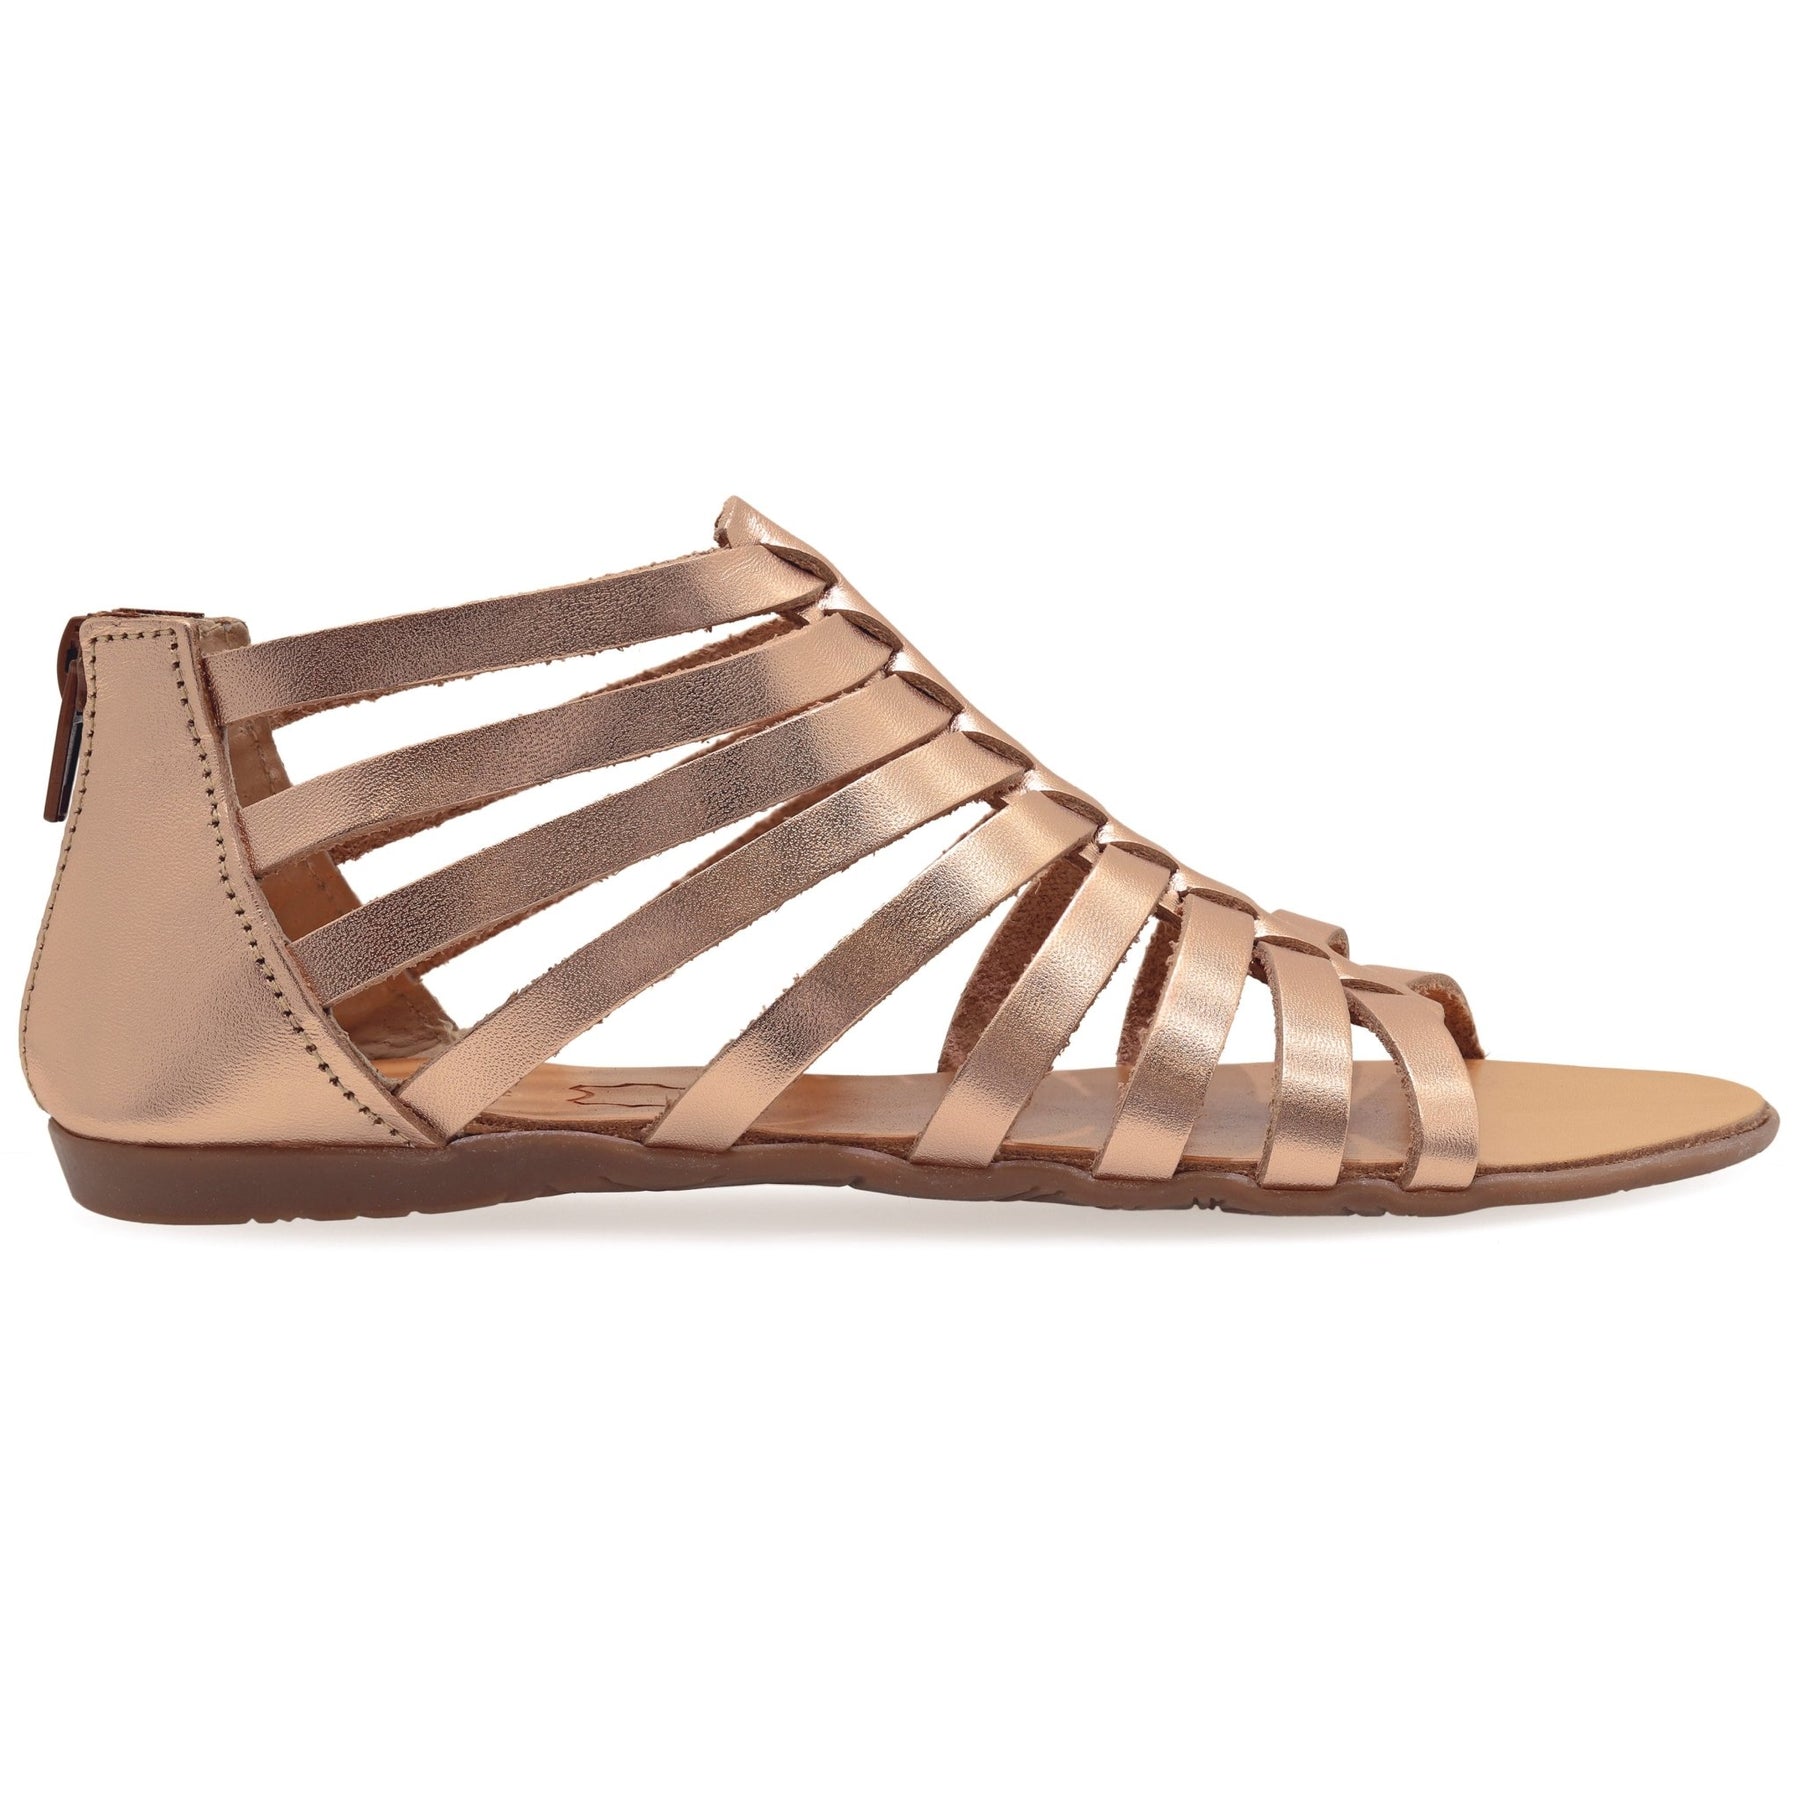 Amazon.com: Ankle-length Gladiator Sandals